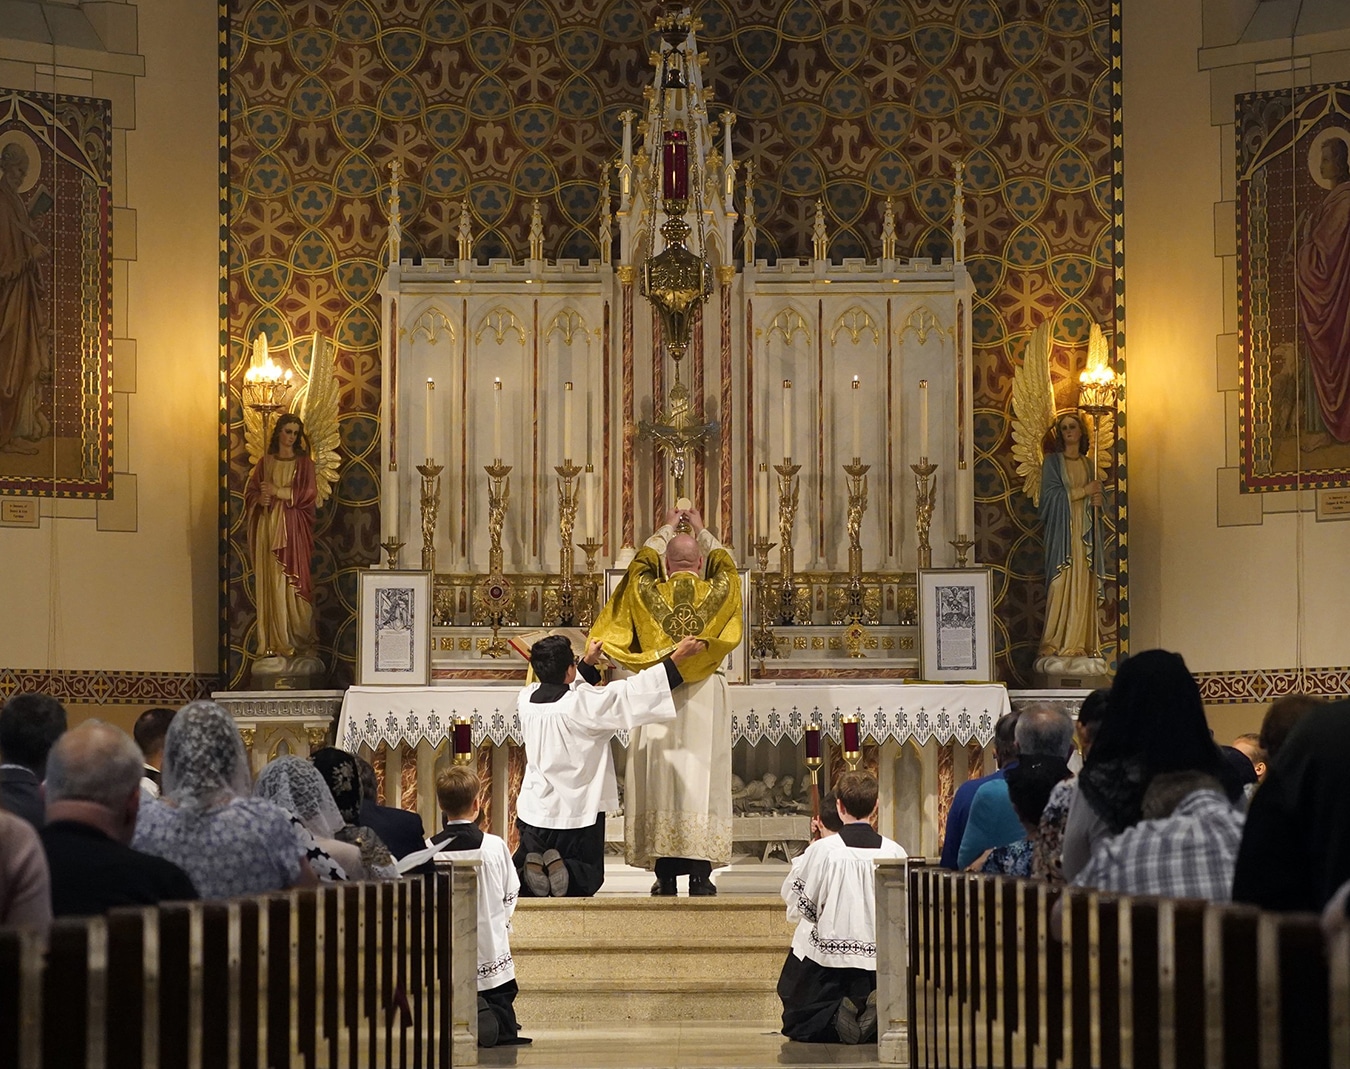 Latin Mass